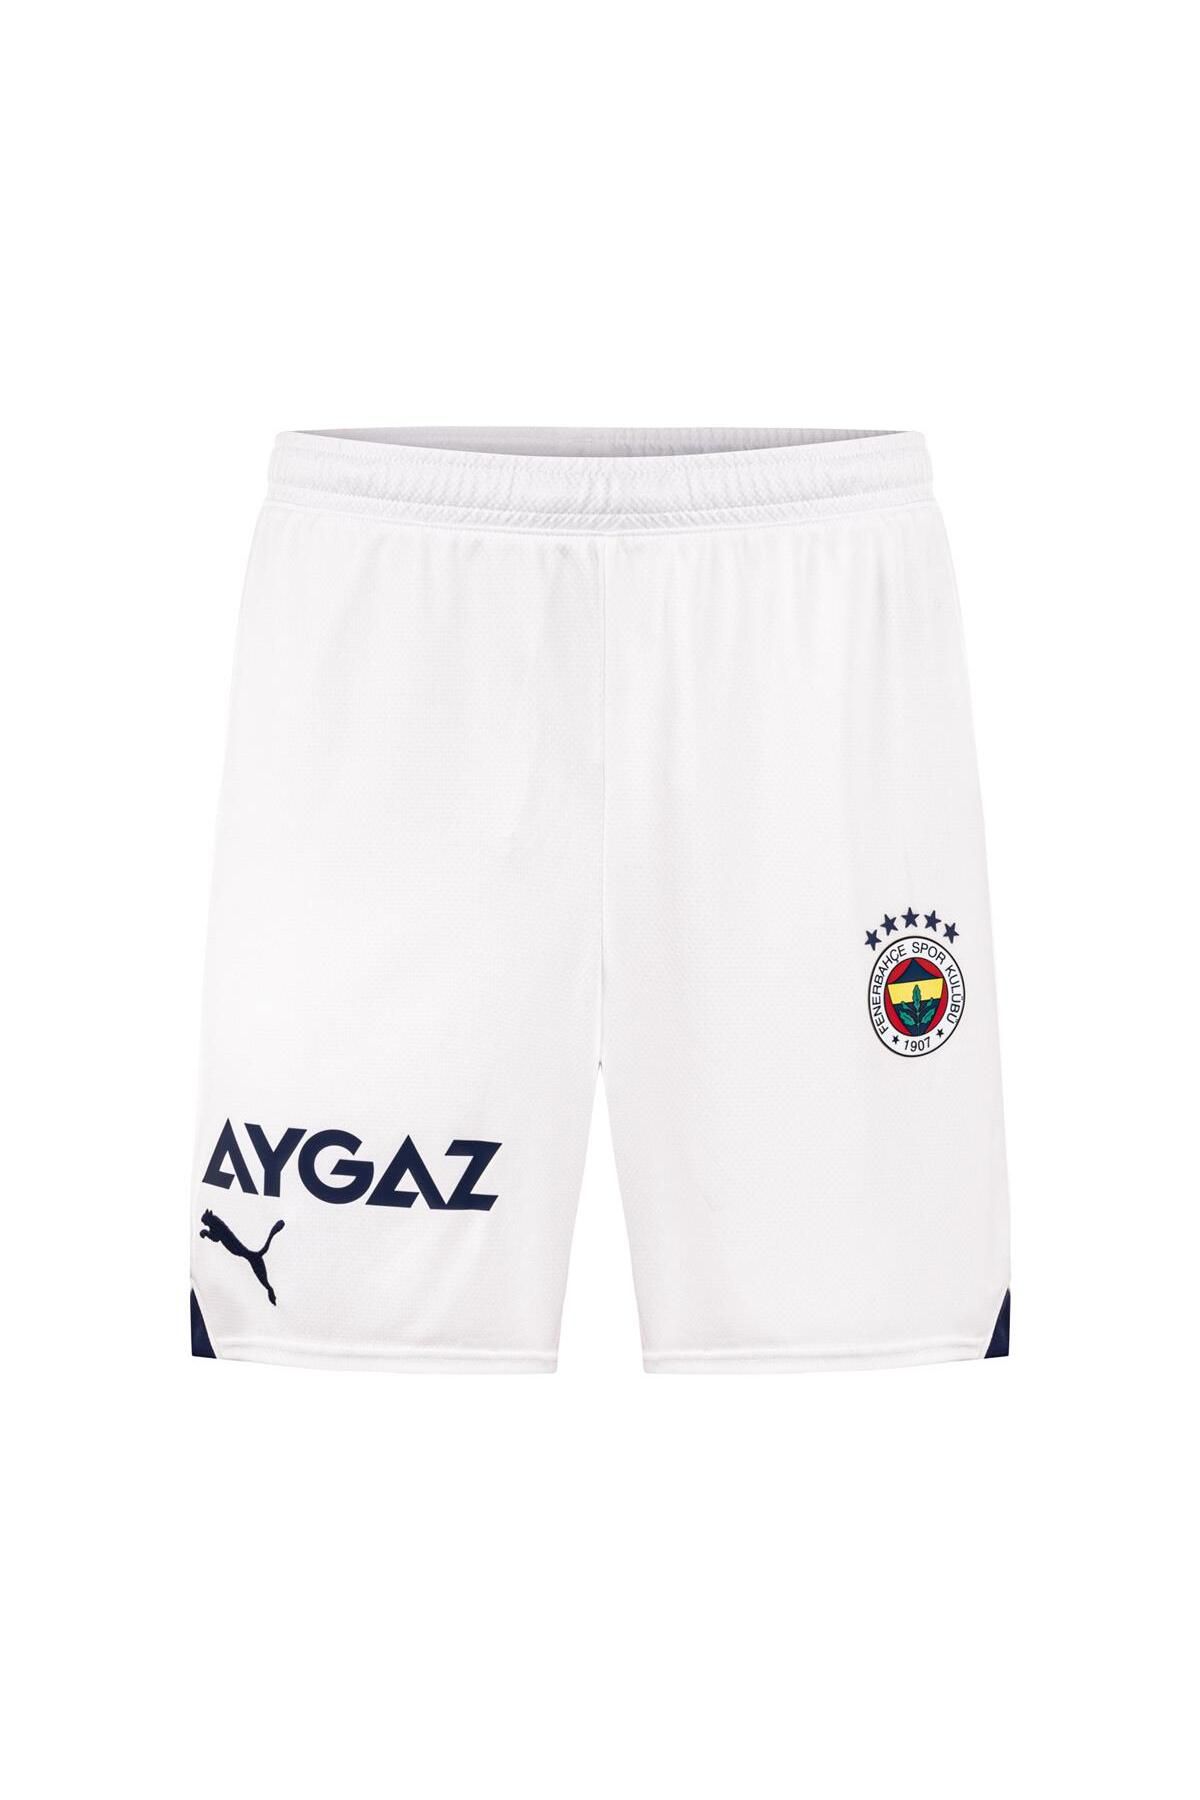 Puma Fsk Shorts Fenerbahçe S.k. 23/24 Erkek Şort